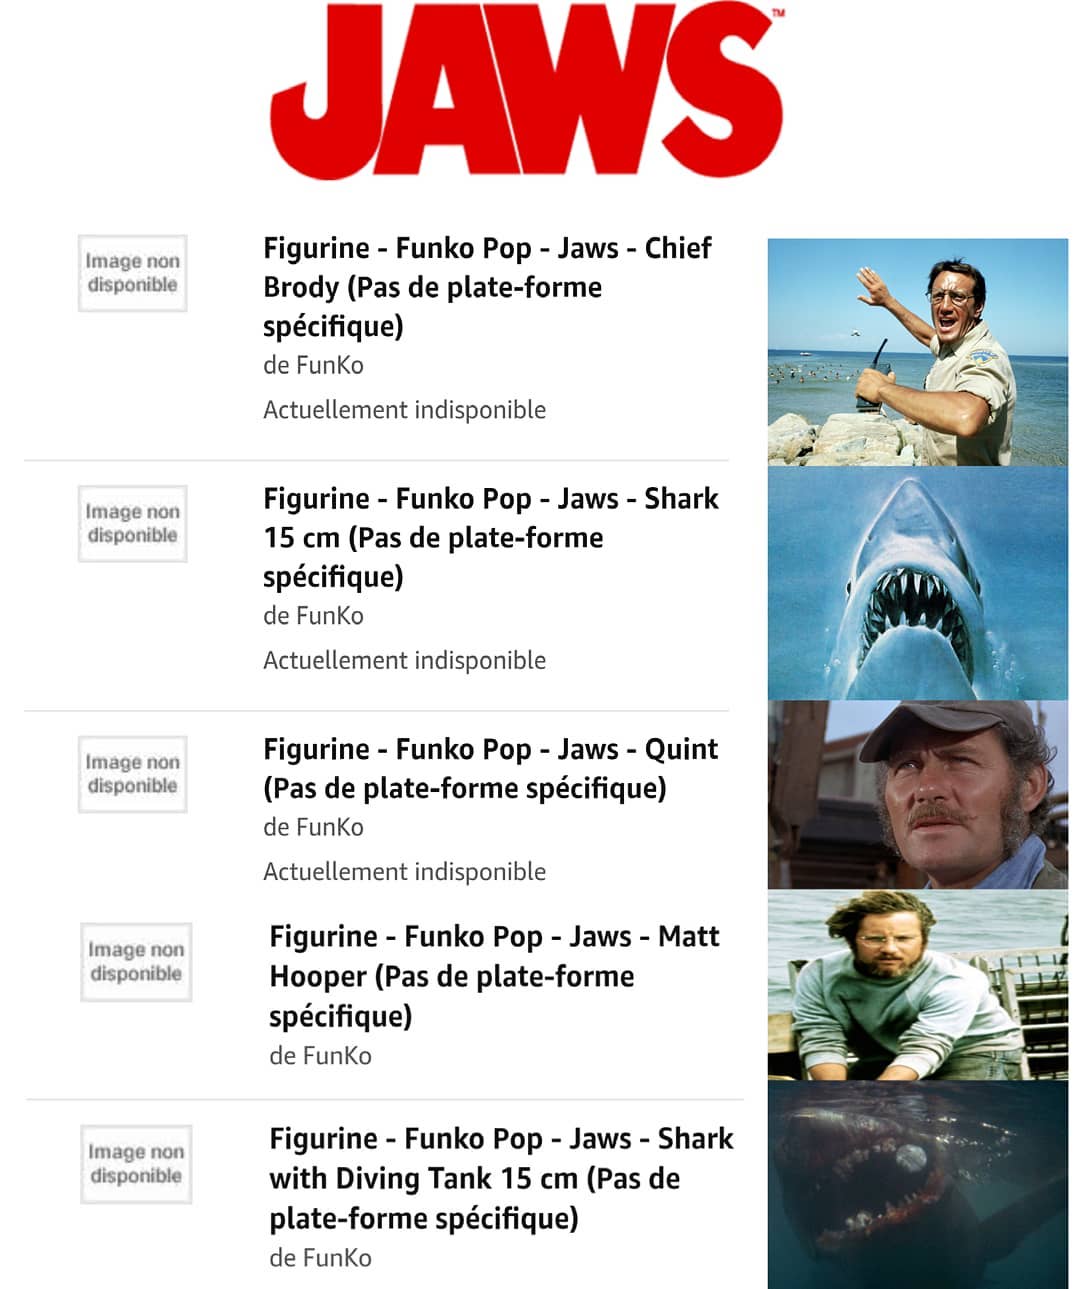 Jaws (Челюсти)